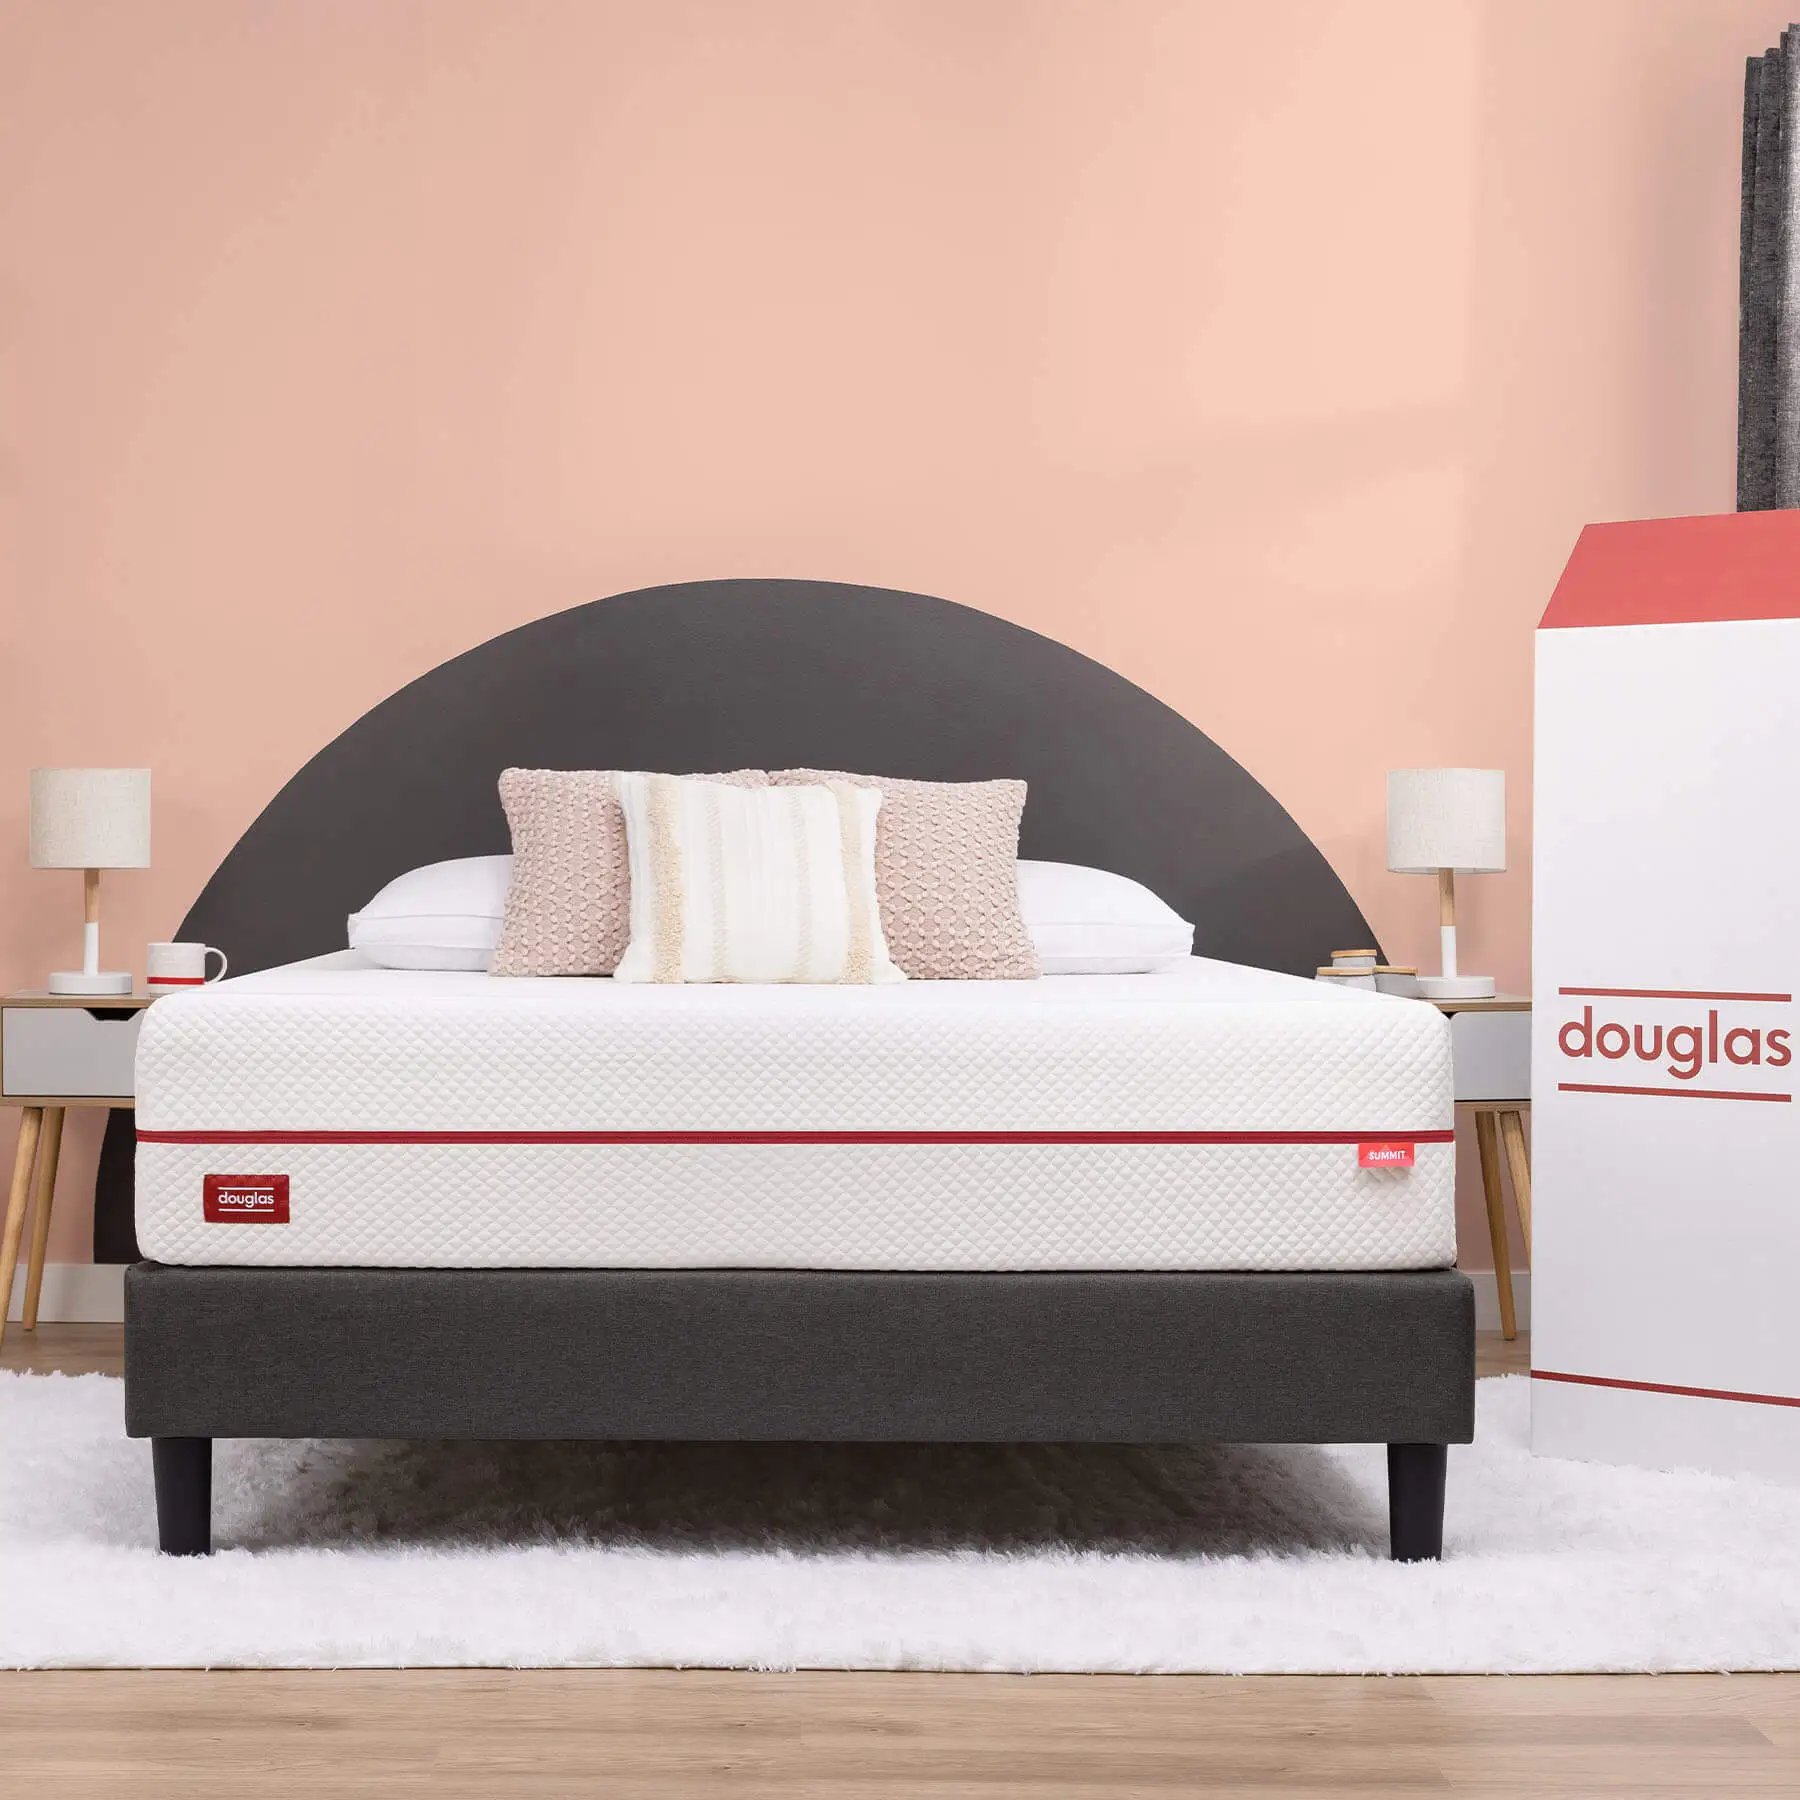 Douglas Summit mattress